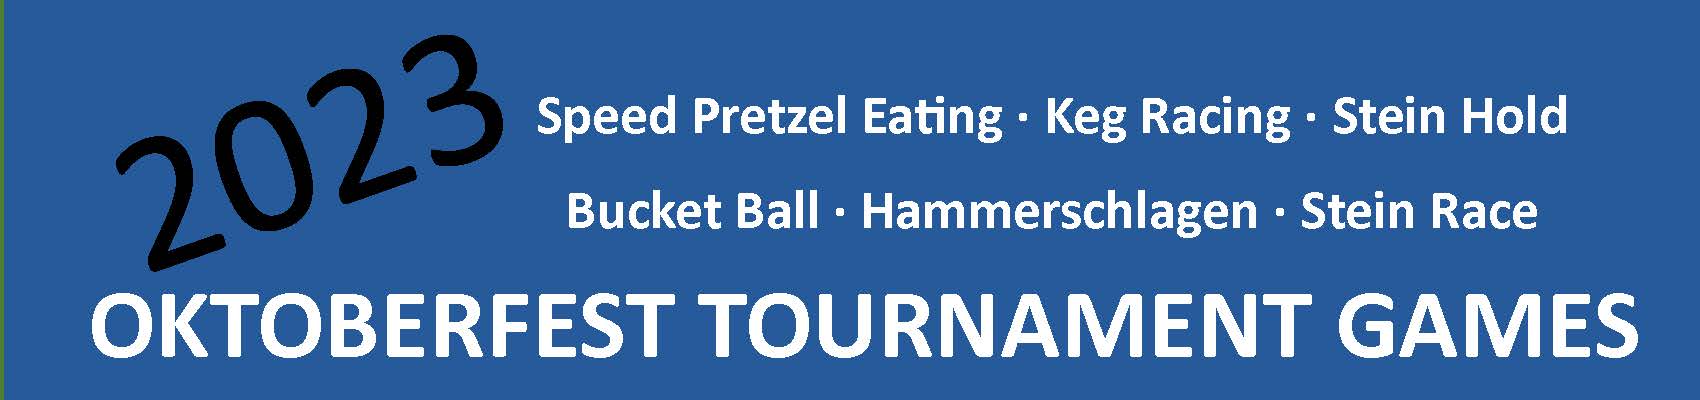 tournament games banner - website